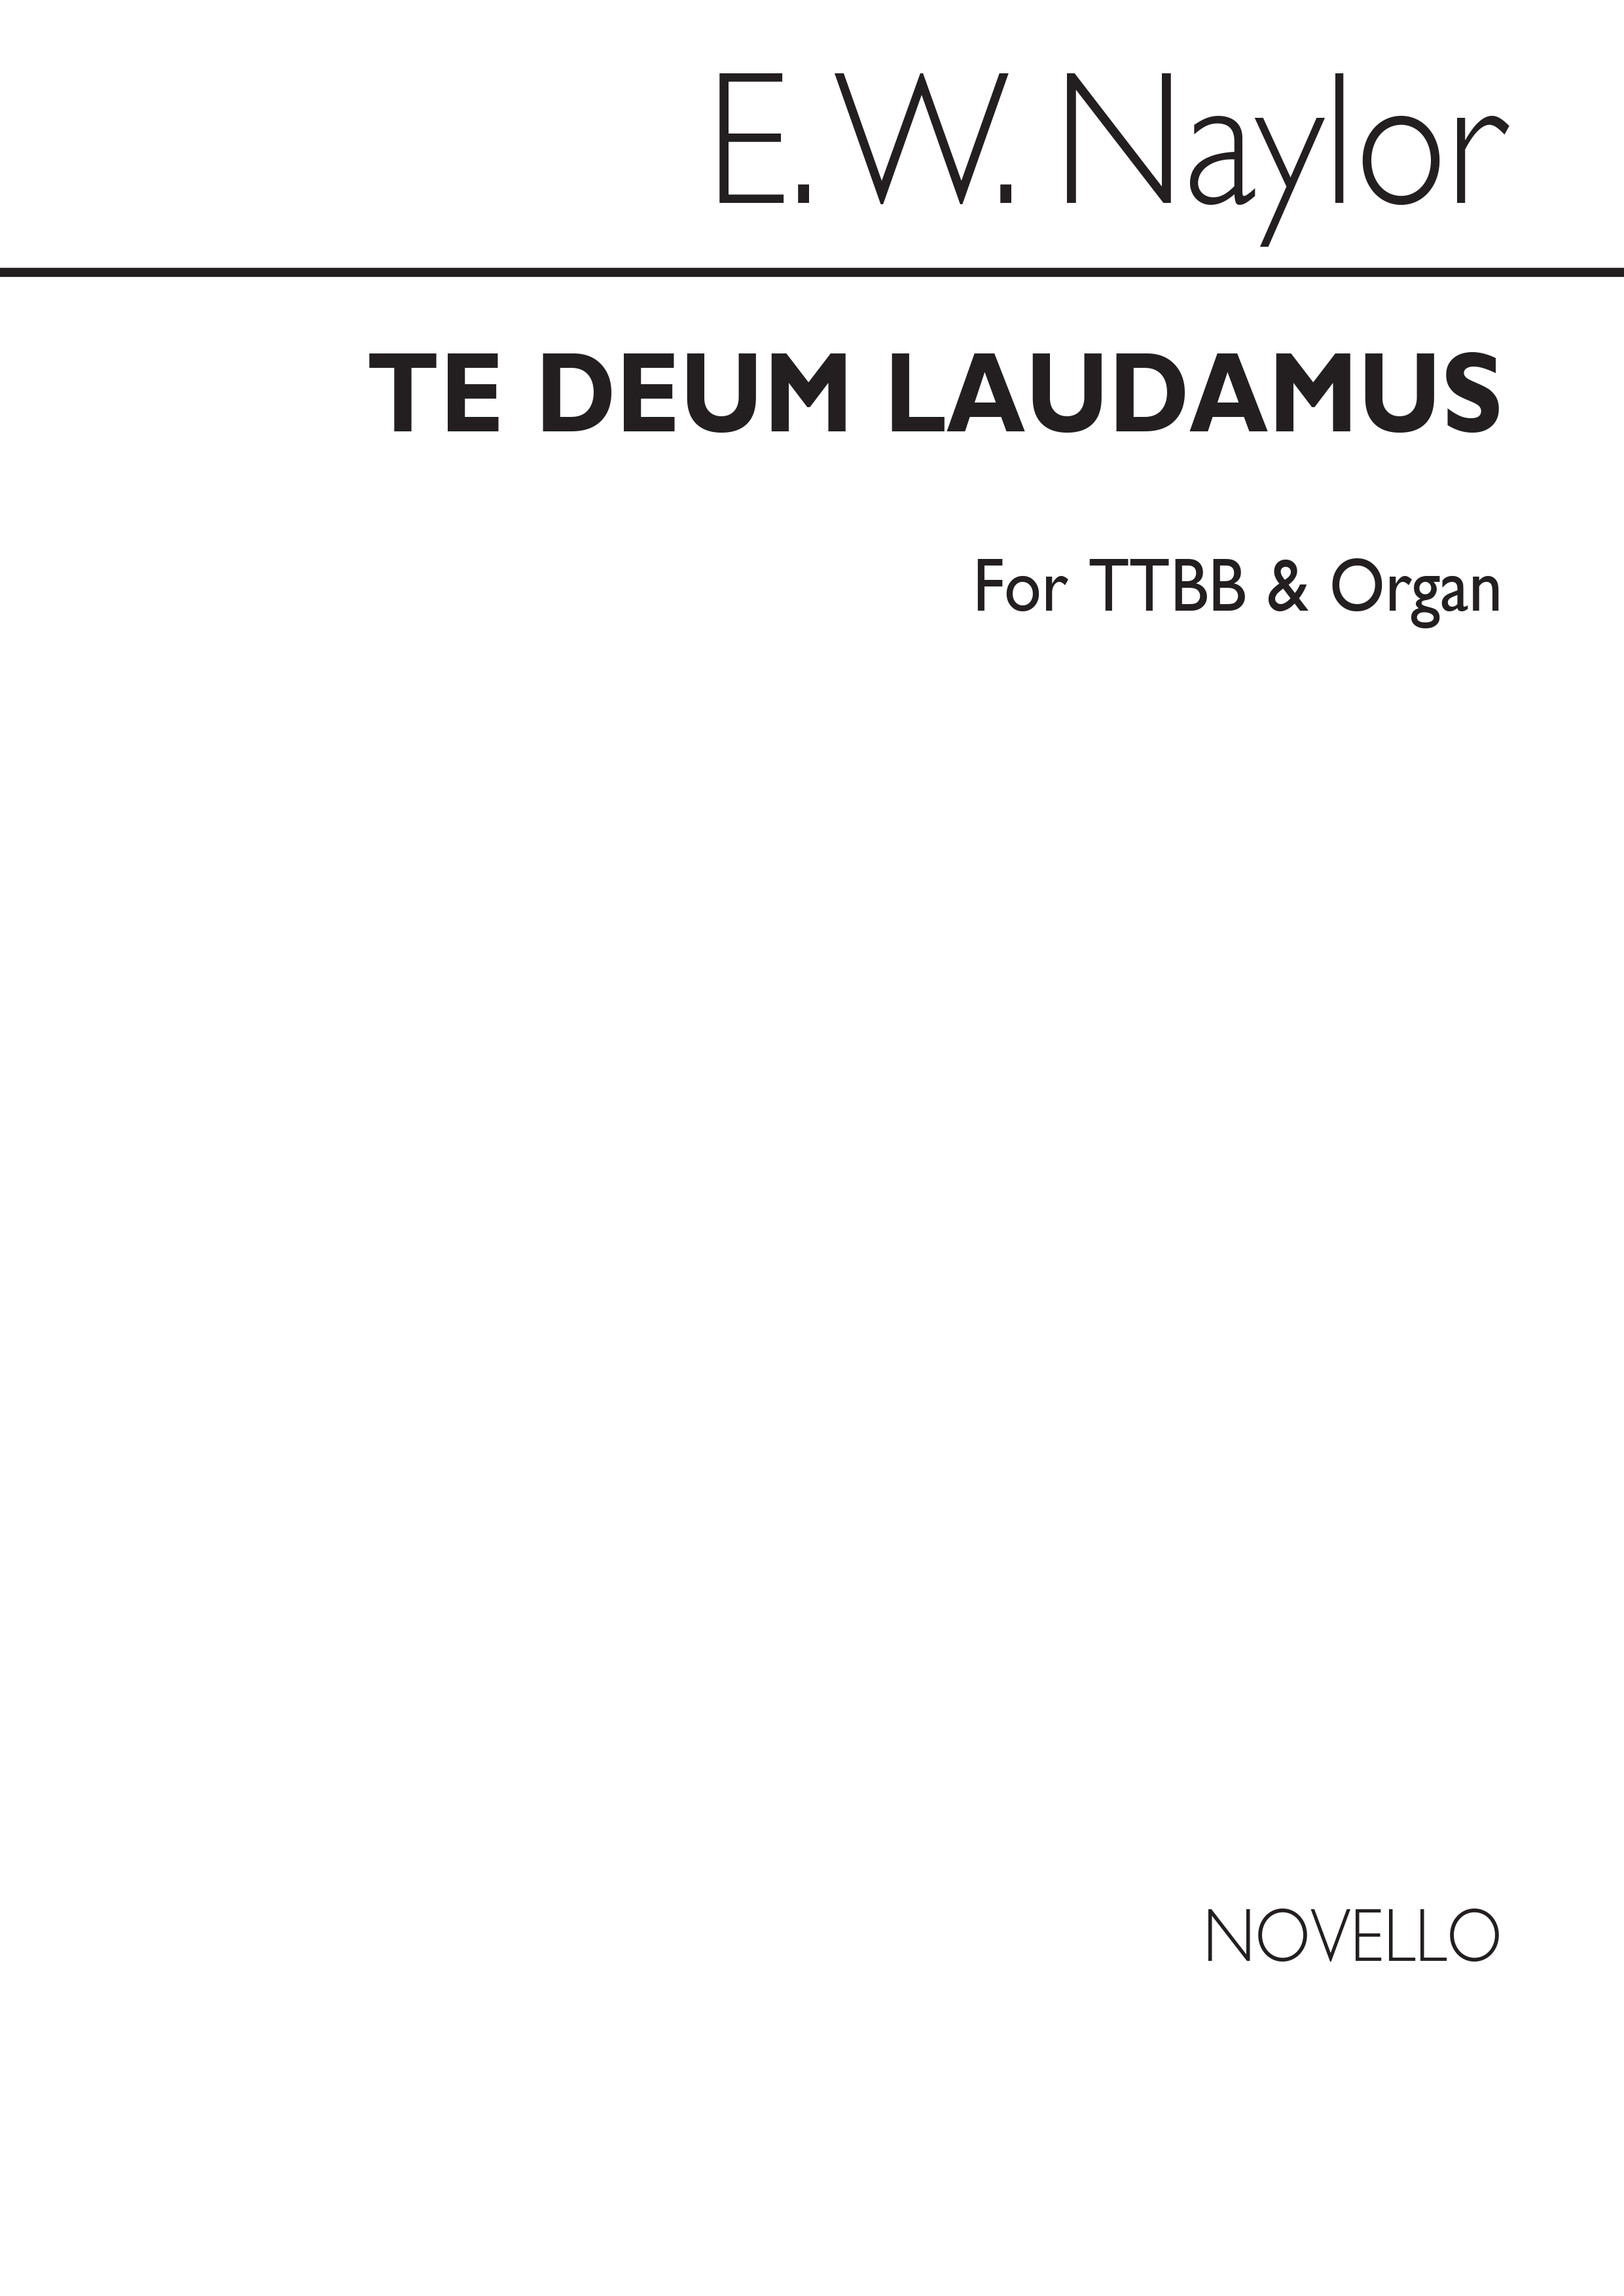 Edward W. Naylor: Te Deum for TTBB Chorus with Organ acc.